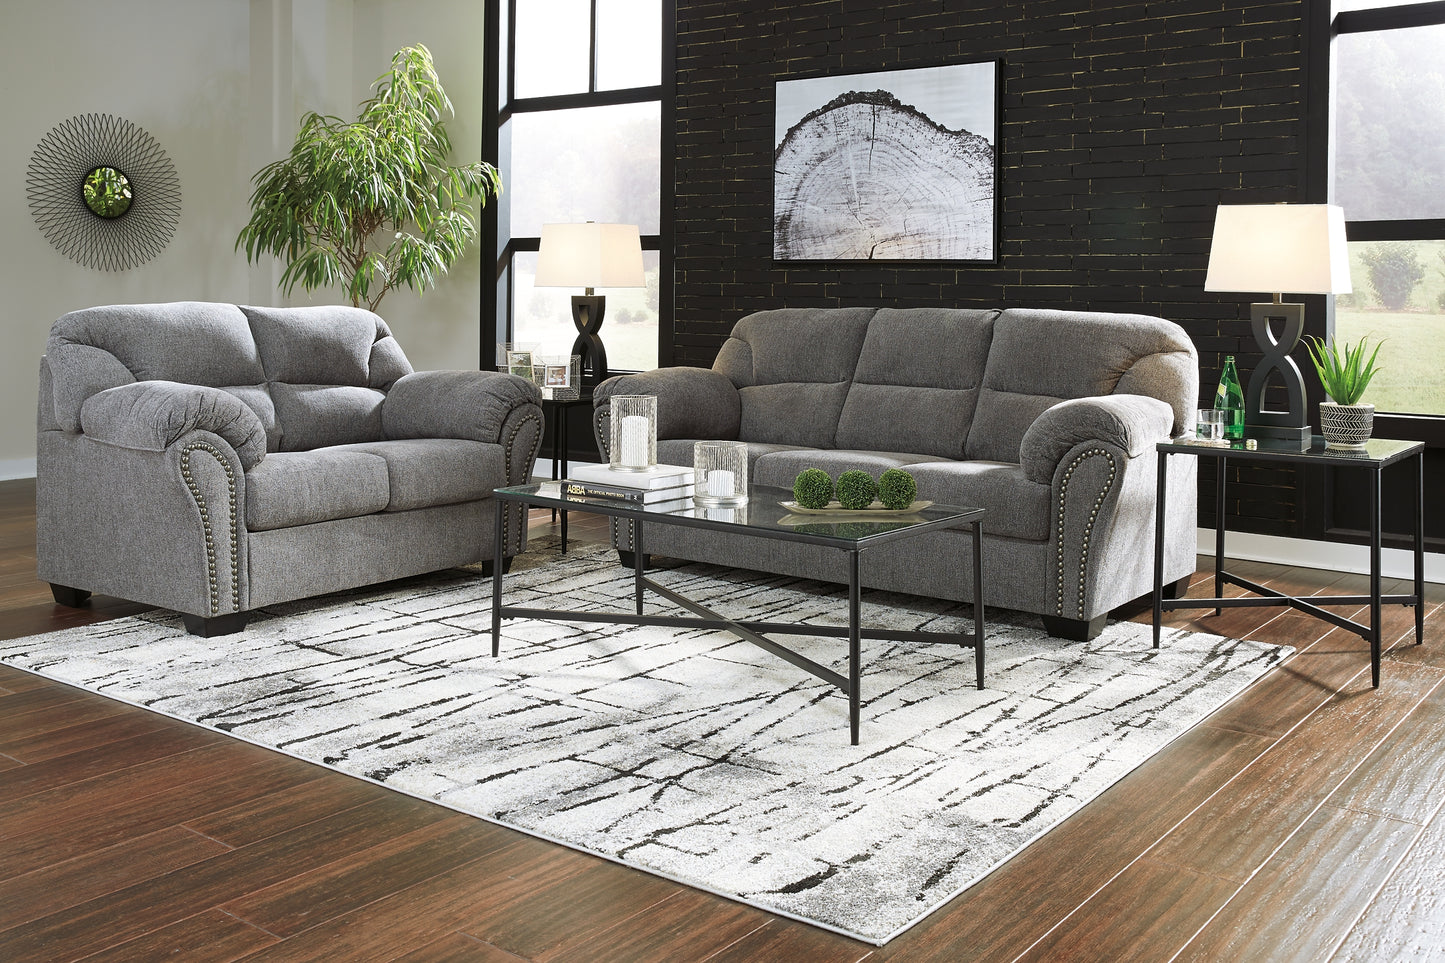 Allmaxx Sofa and Loveseat JB's Furniture  Home Furniture, Home Decor, Furniture Store